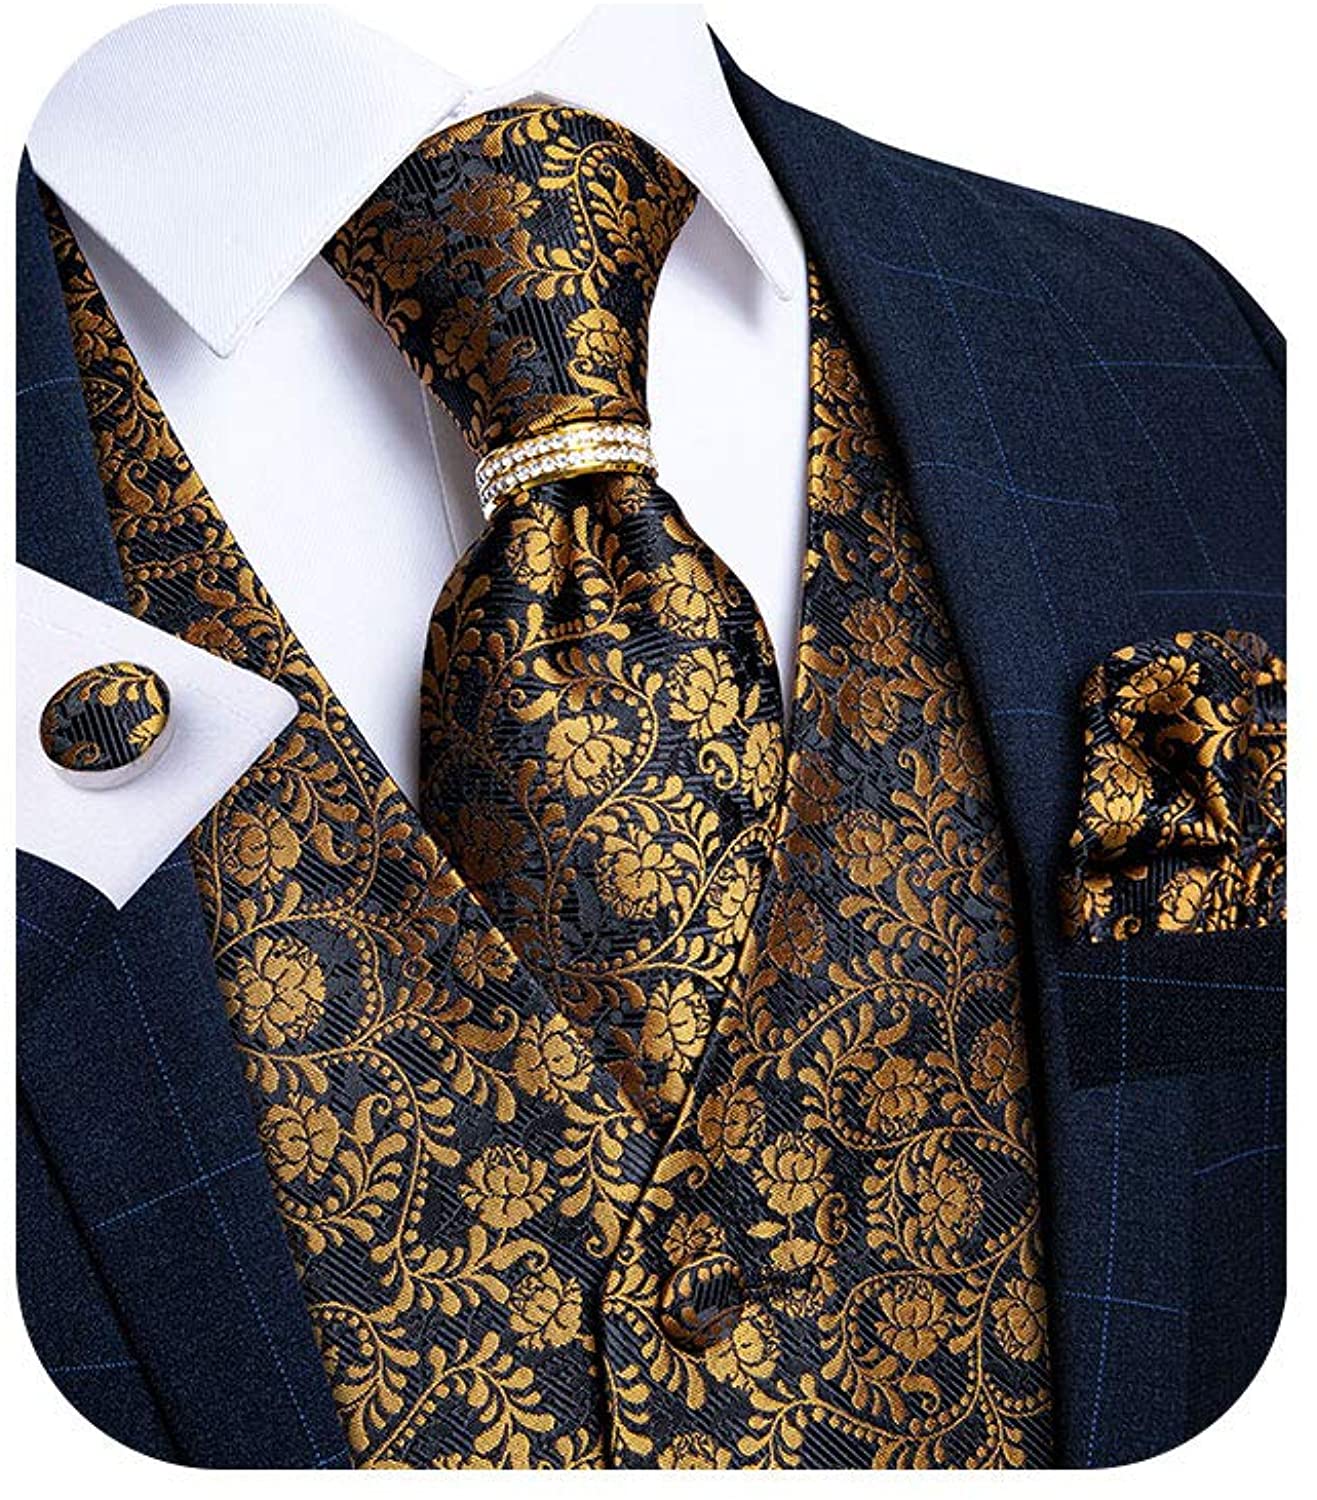 DiBanGu Mens Suit Vest Set 5 PCS Tuxedo Waistcoat and Tie Pocket Square Cufflinks Tie Ring for Wedding